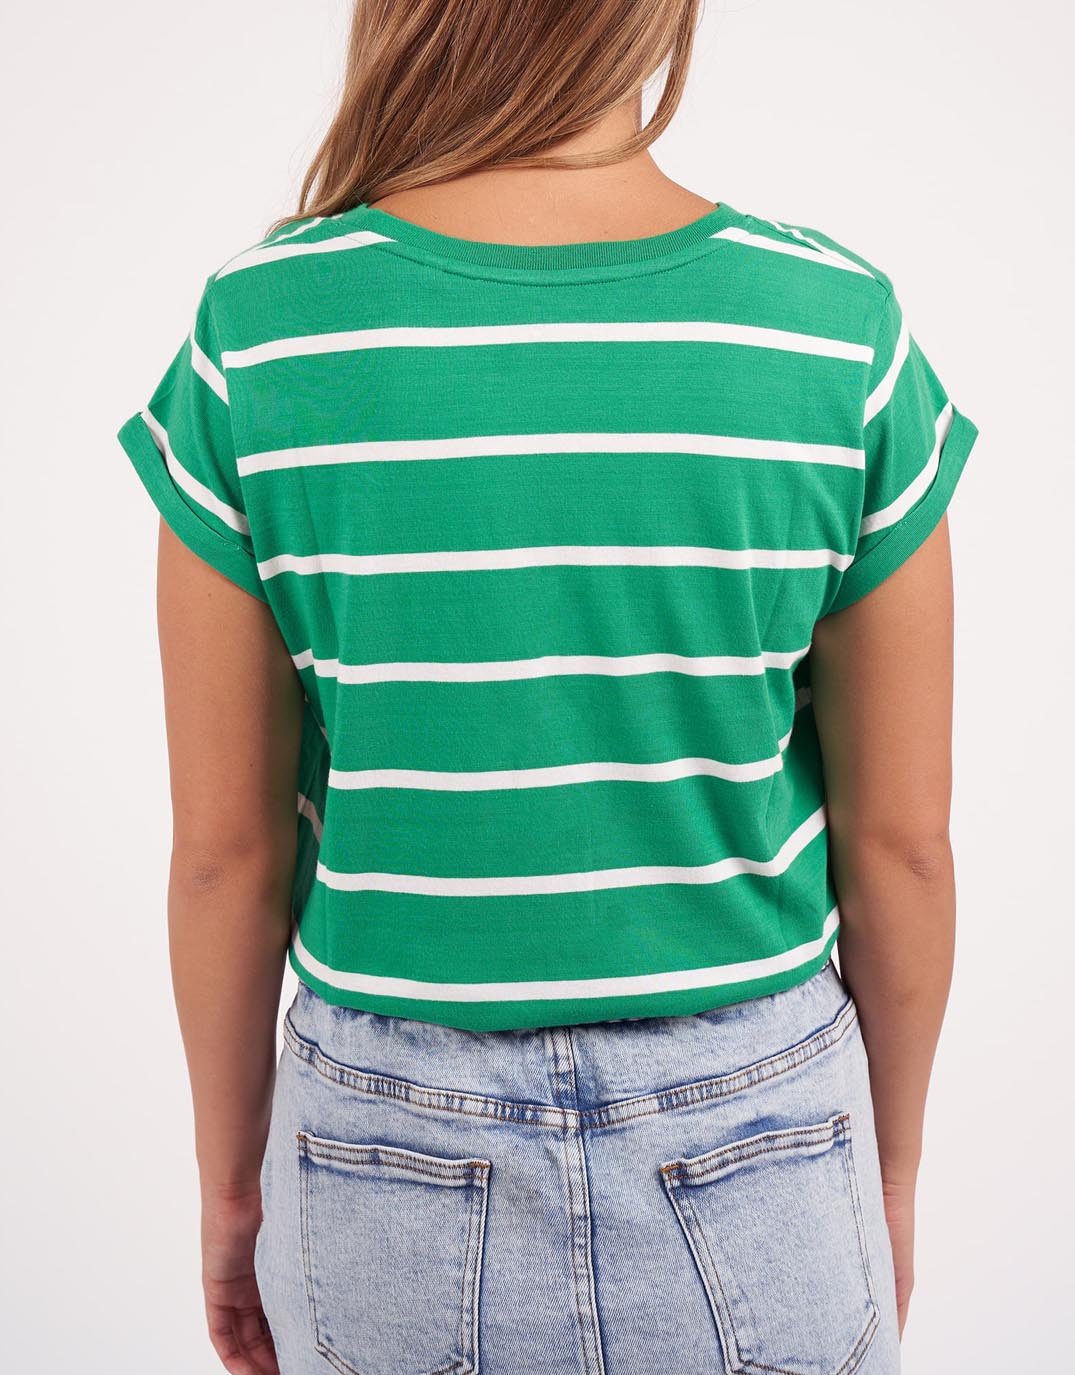 foxwood-manly-stripe-tee-green-white-stripe-womens-clothing